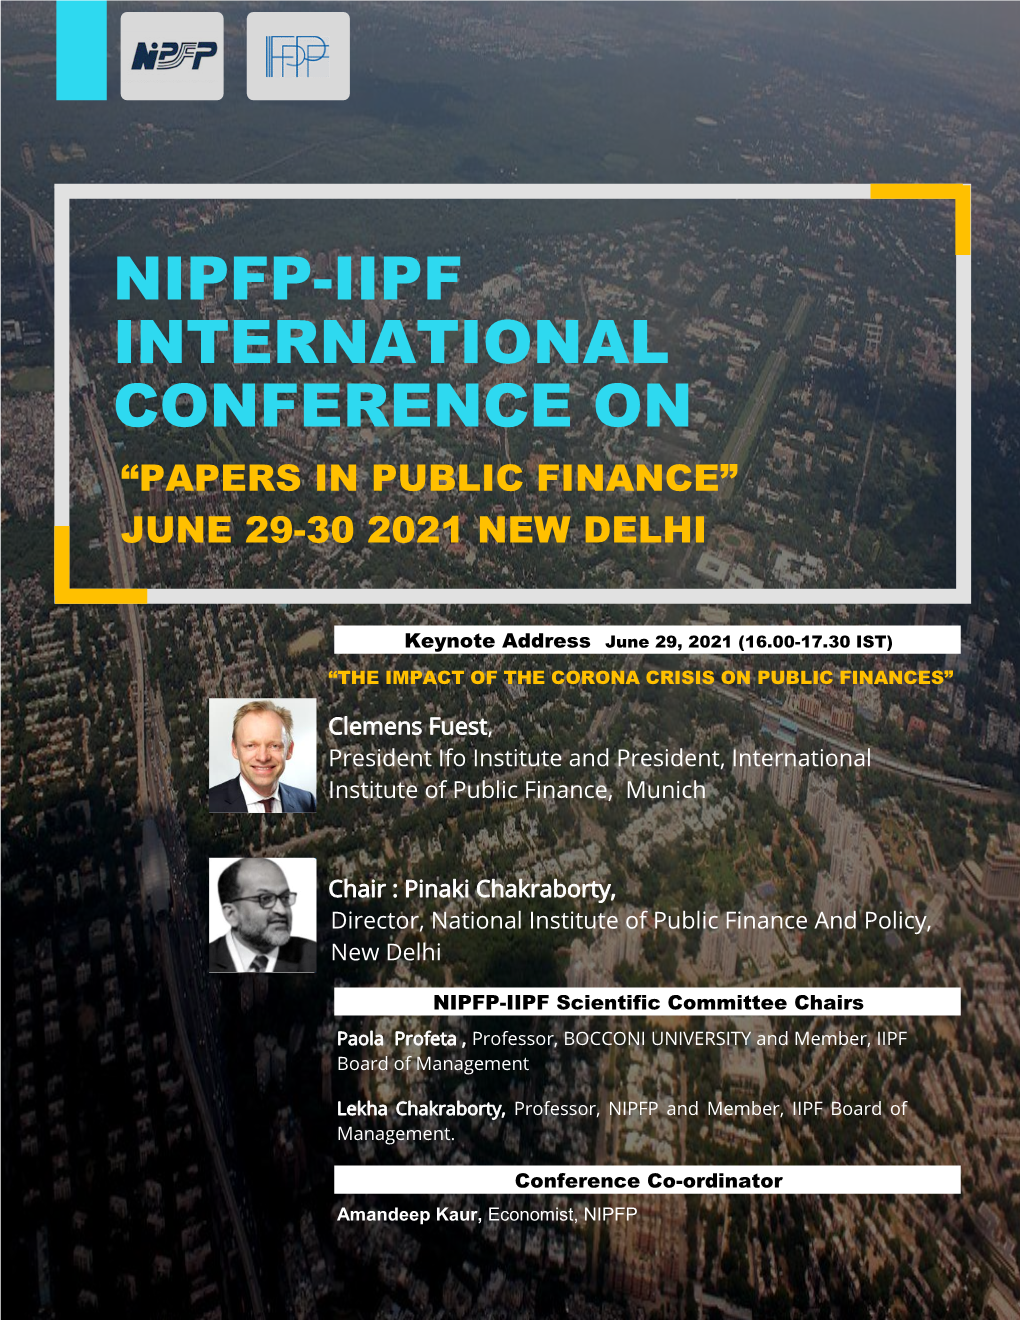 Nipfp-Iipf International Conference on “Papers in Public Finance” June 29-30 2021 New Delhi